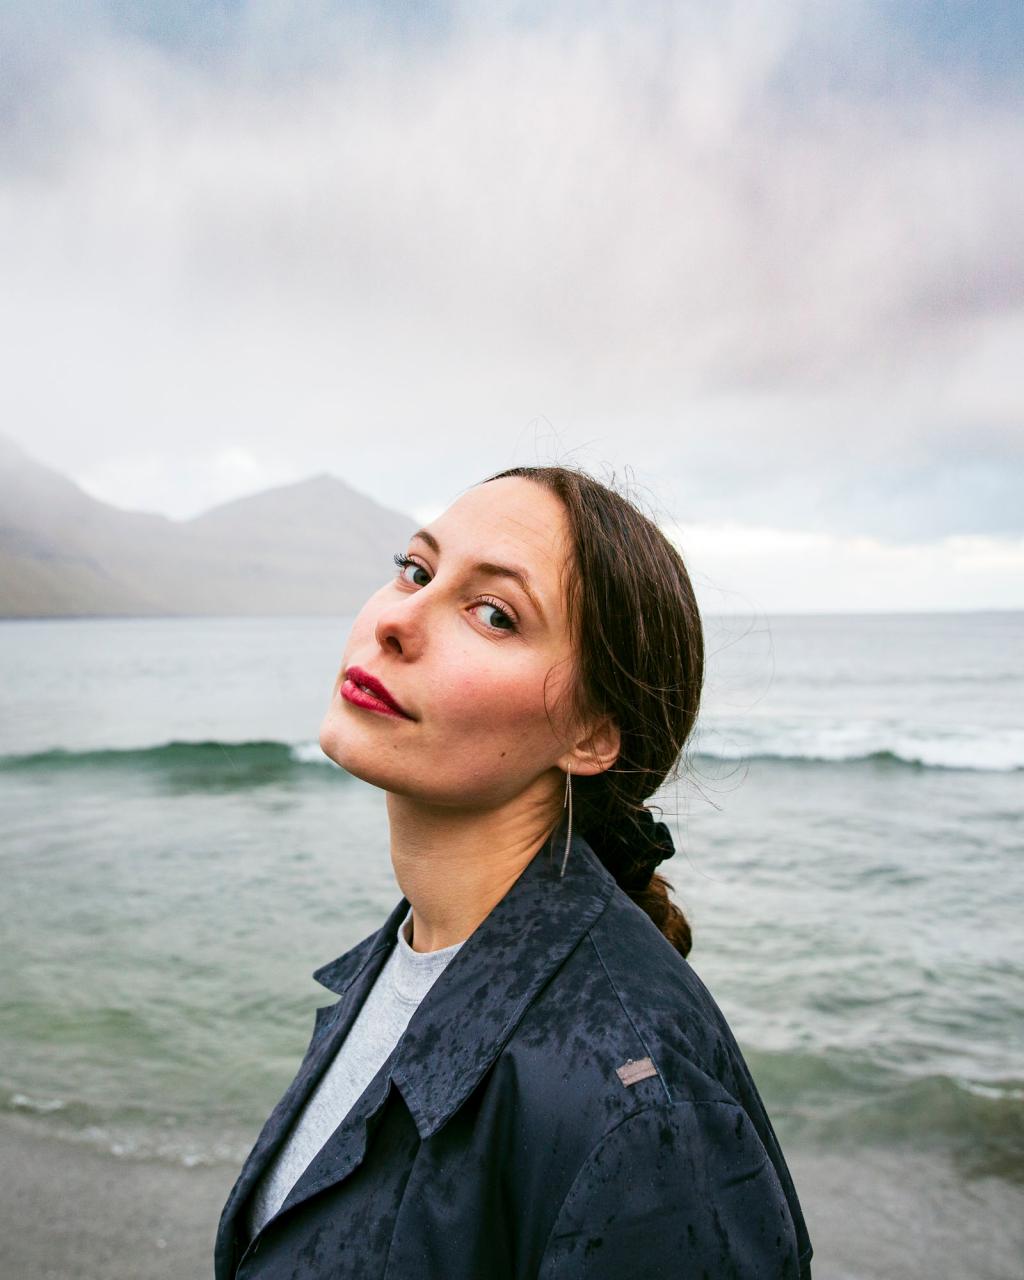 Faroese singer, Lea Kampmann. Pictures by Colin Kerrigan - @colinkerrigan 

(October 2019)